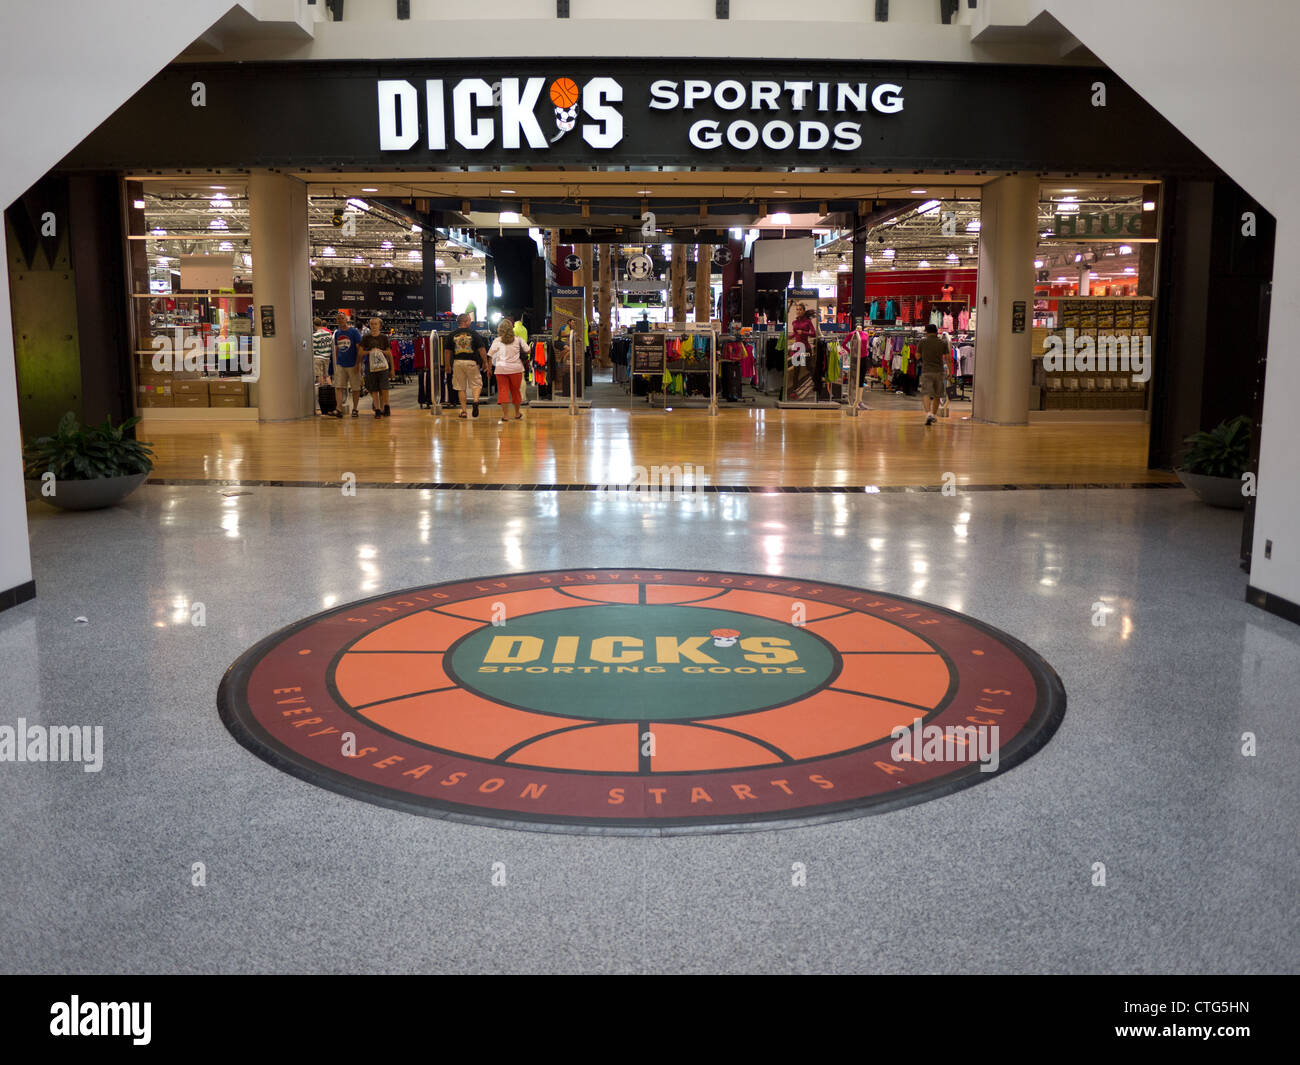 dicks sporting goods retail store entrance logo Stock Photo